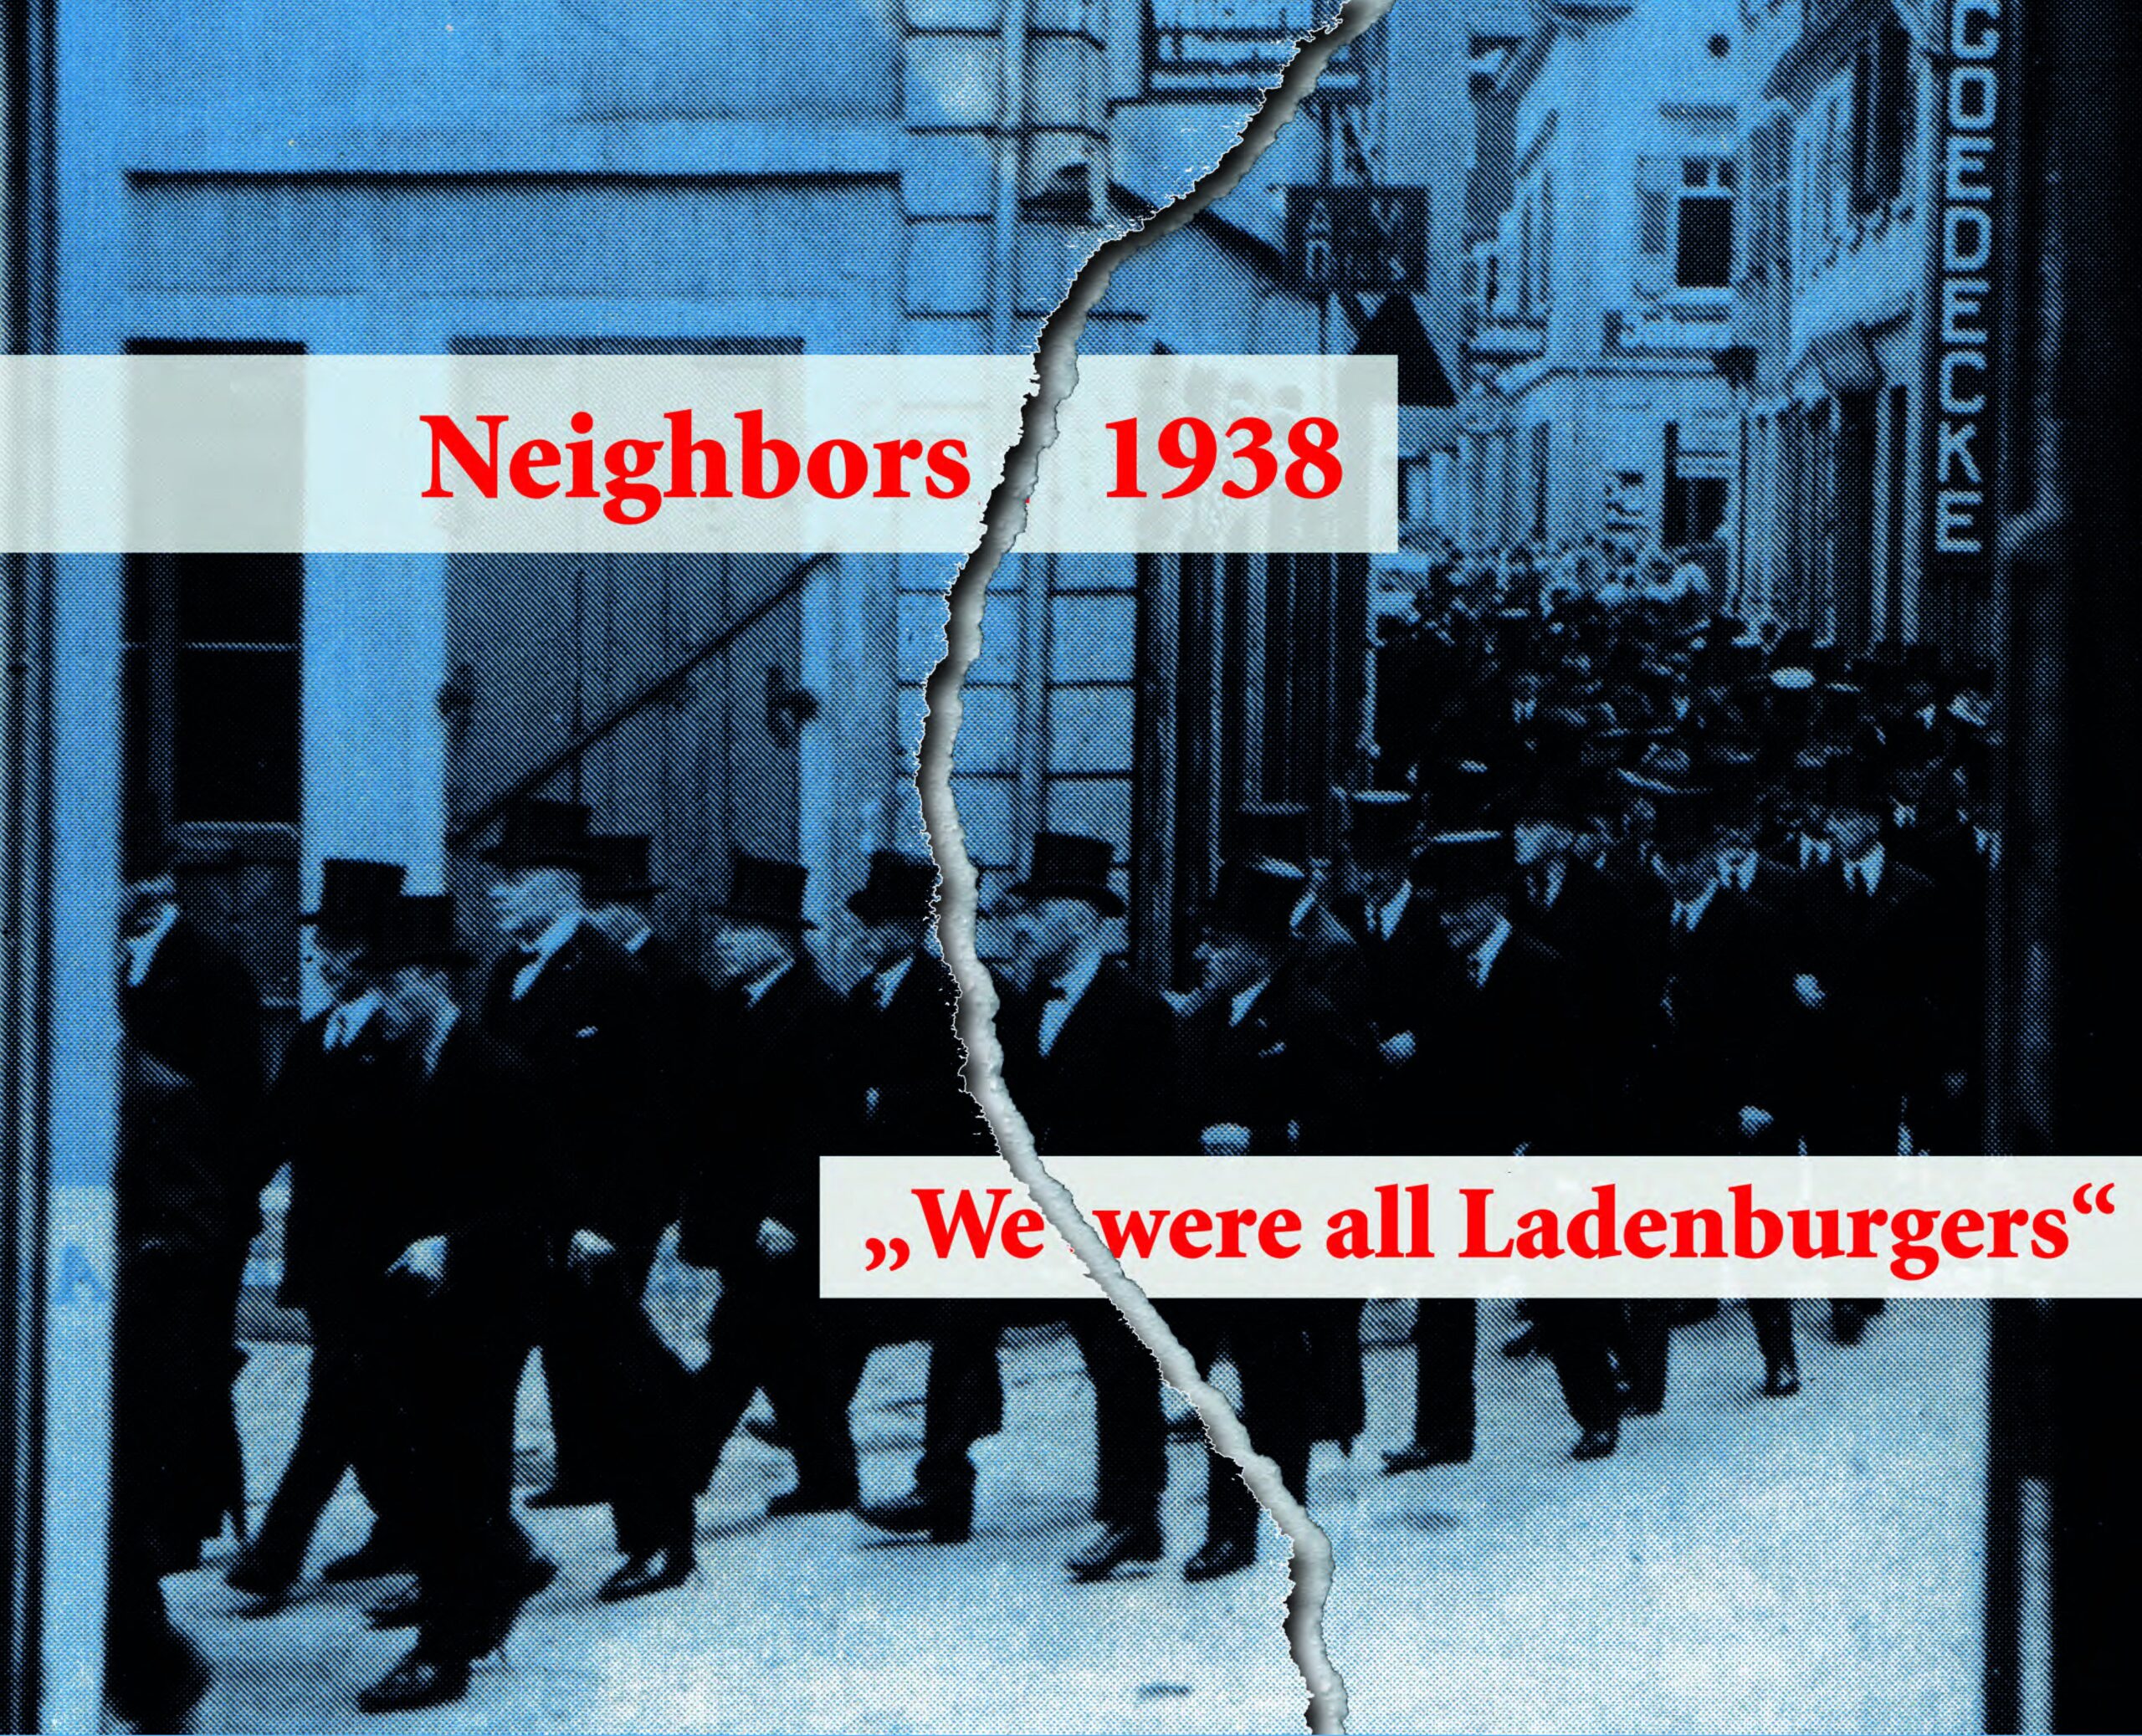 neighbors 1938 ladenburgers blue 300dpi.jpg 3929x3184 q85 subsampling 2 upscale